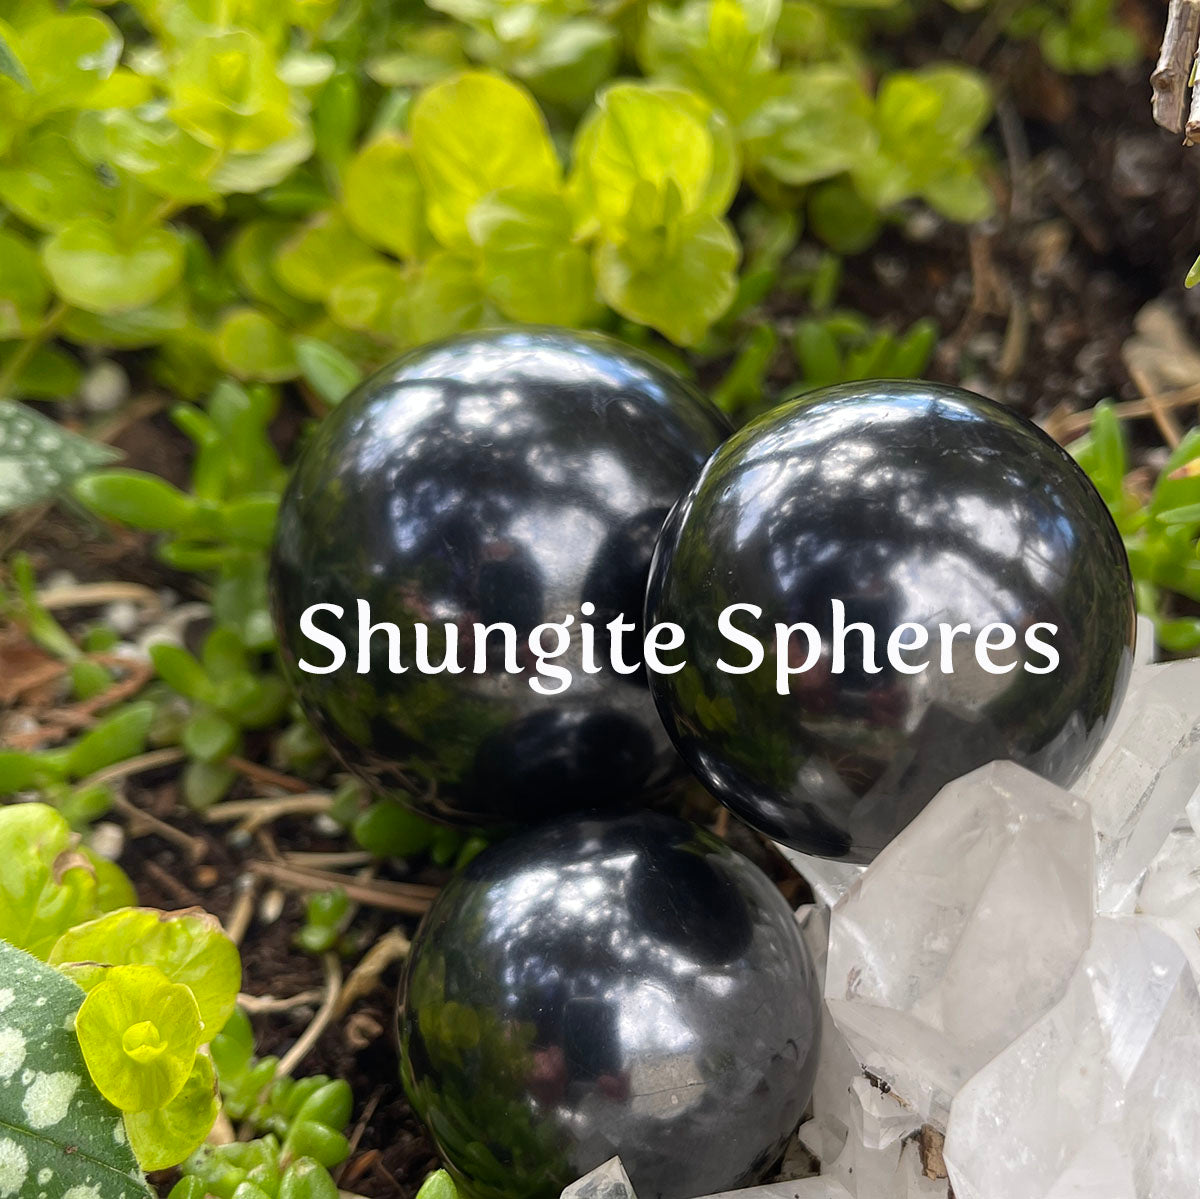 Shungite Spheres